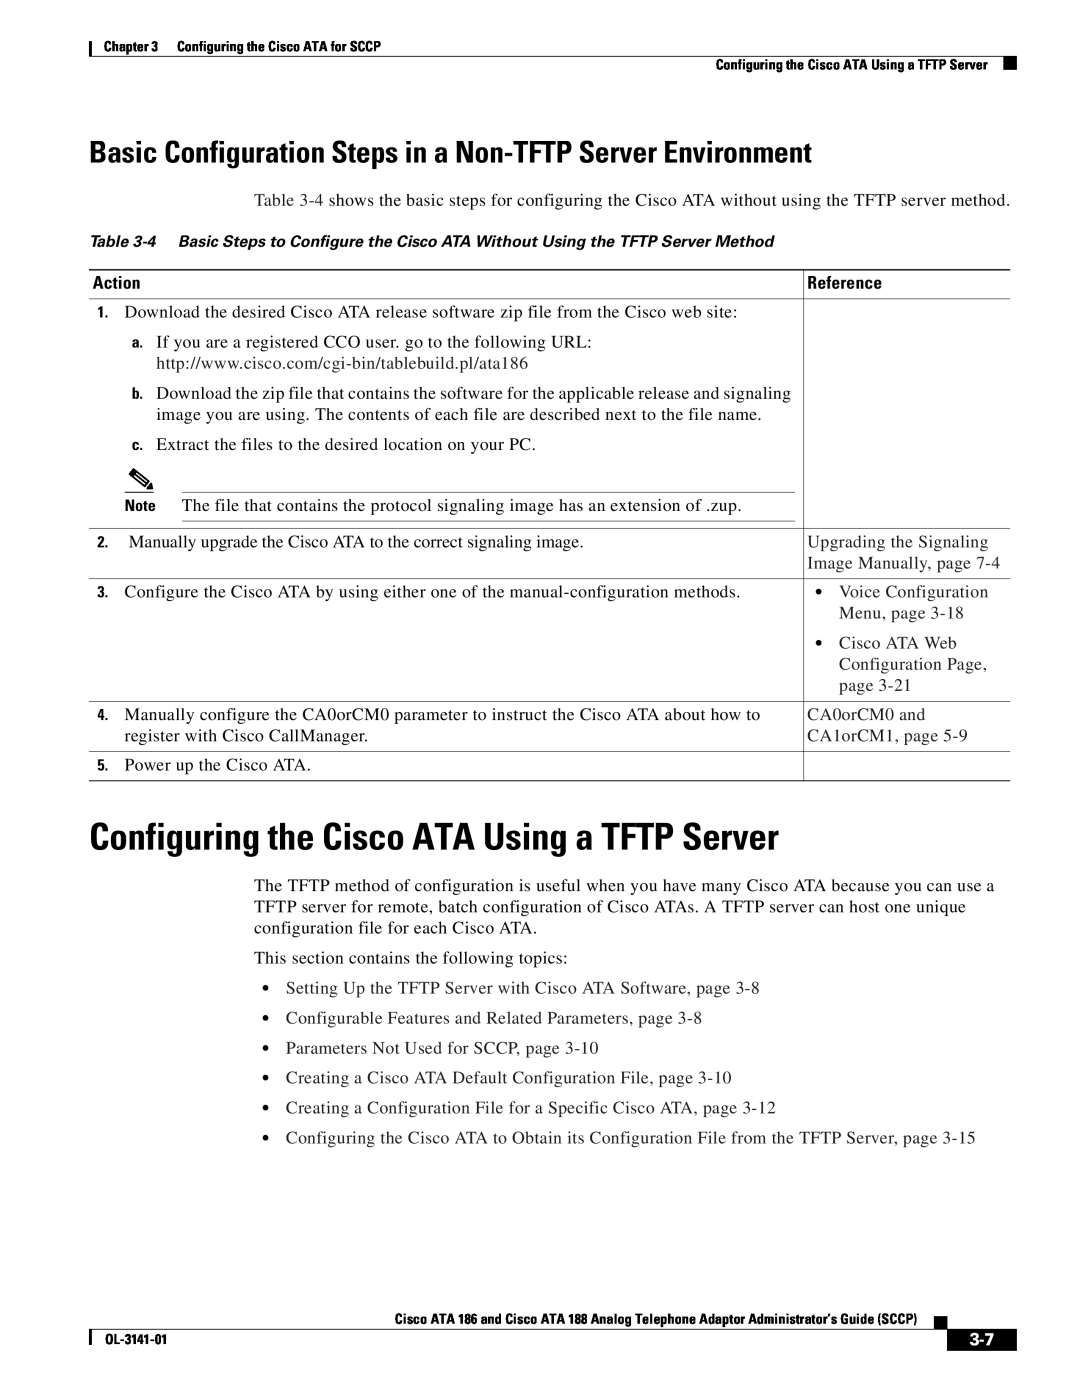 Cisco Systems ATA 188 Configuring the Cisco ATA Using a TFTP Server, Action, Upgrading the Signaling, Image Manually, page 